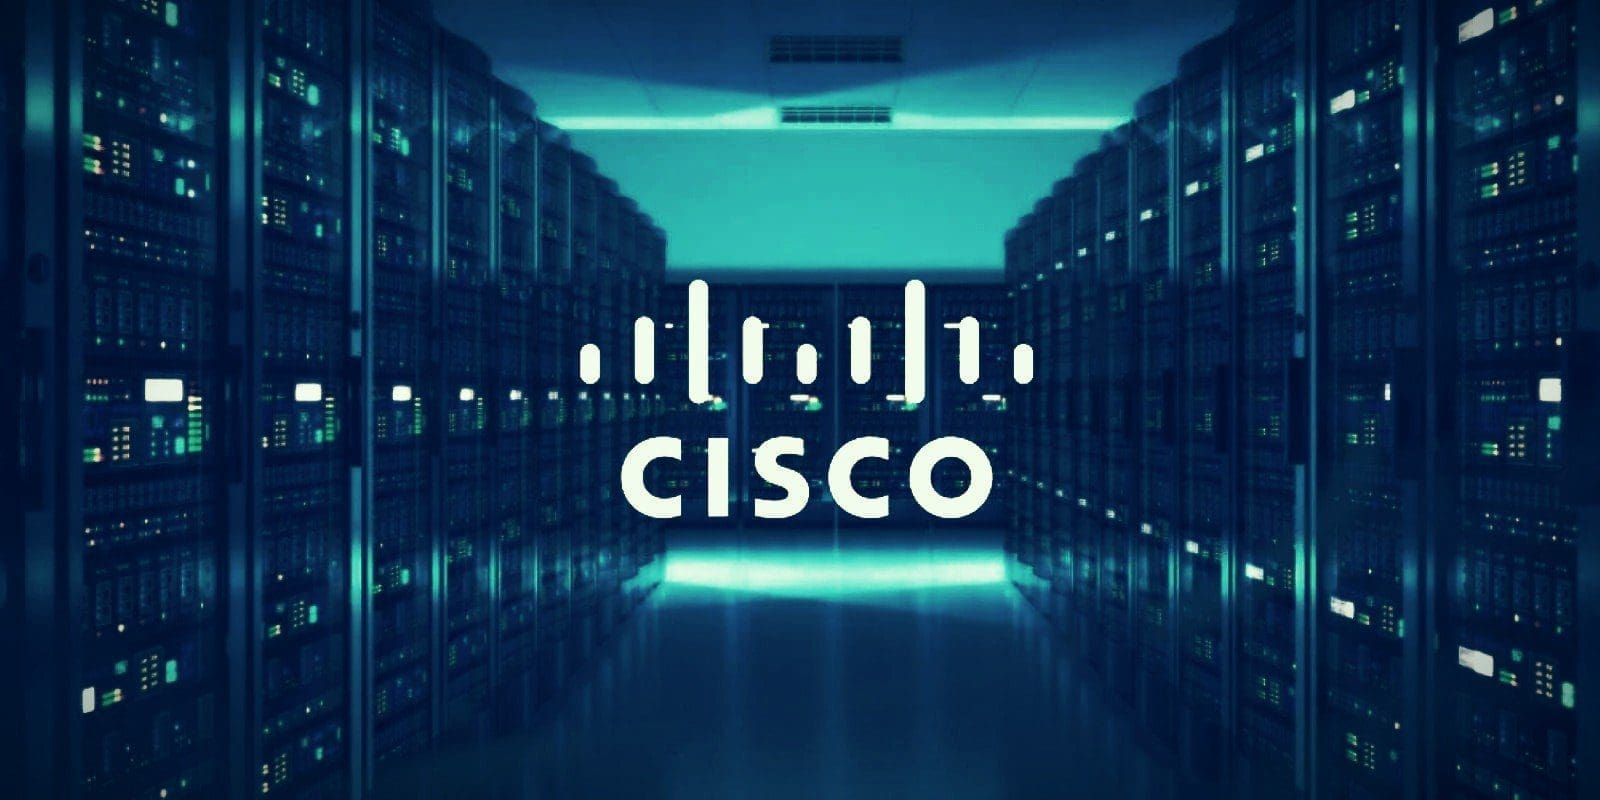 Cisco ccna certification